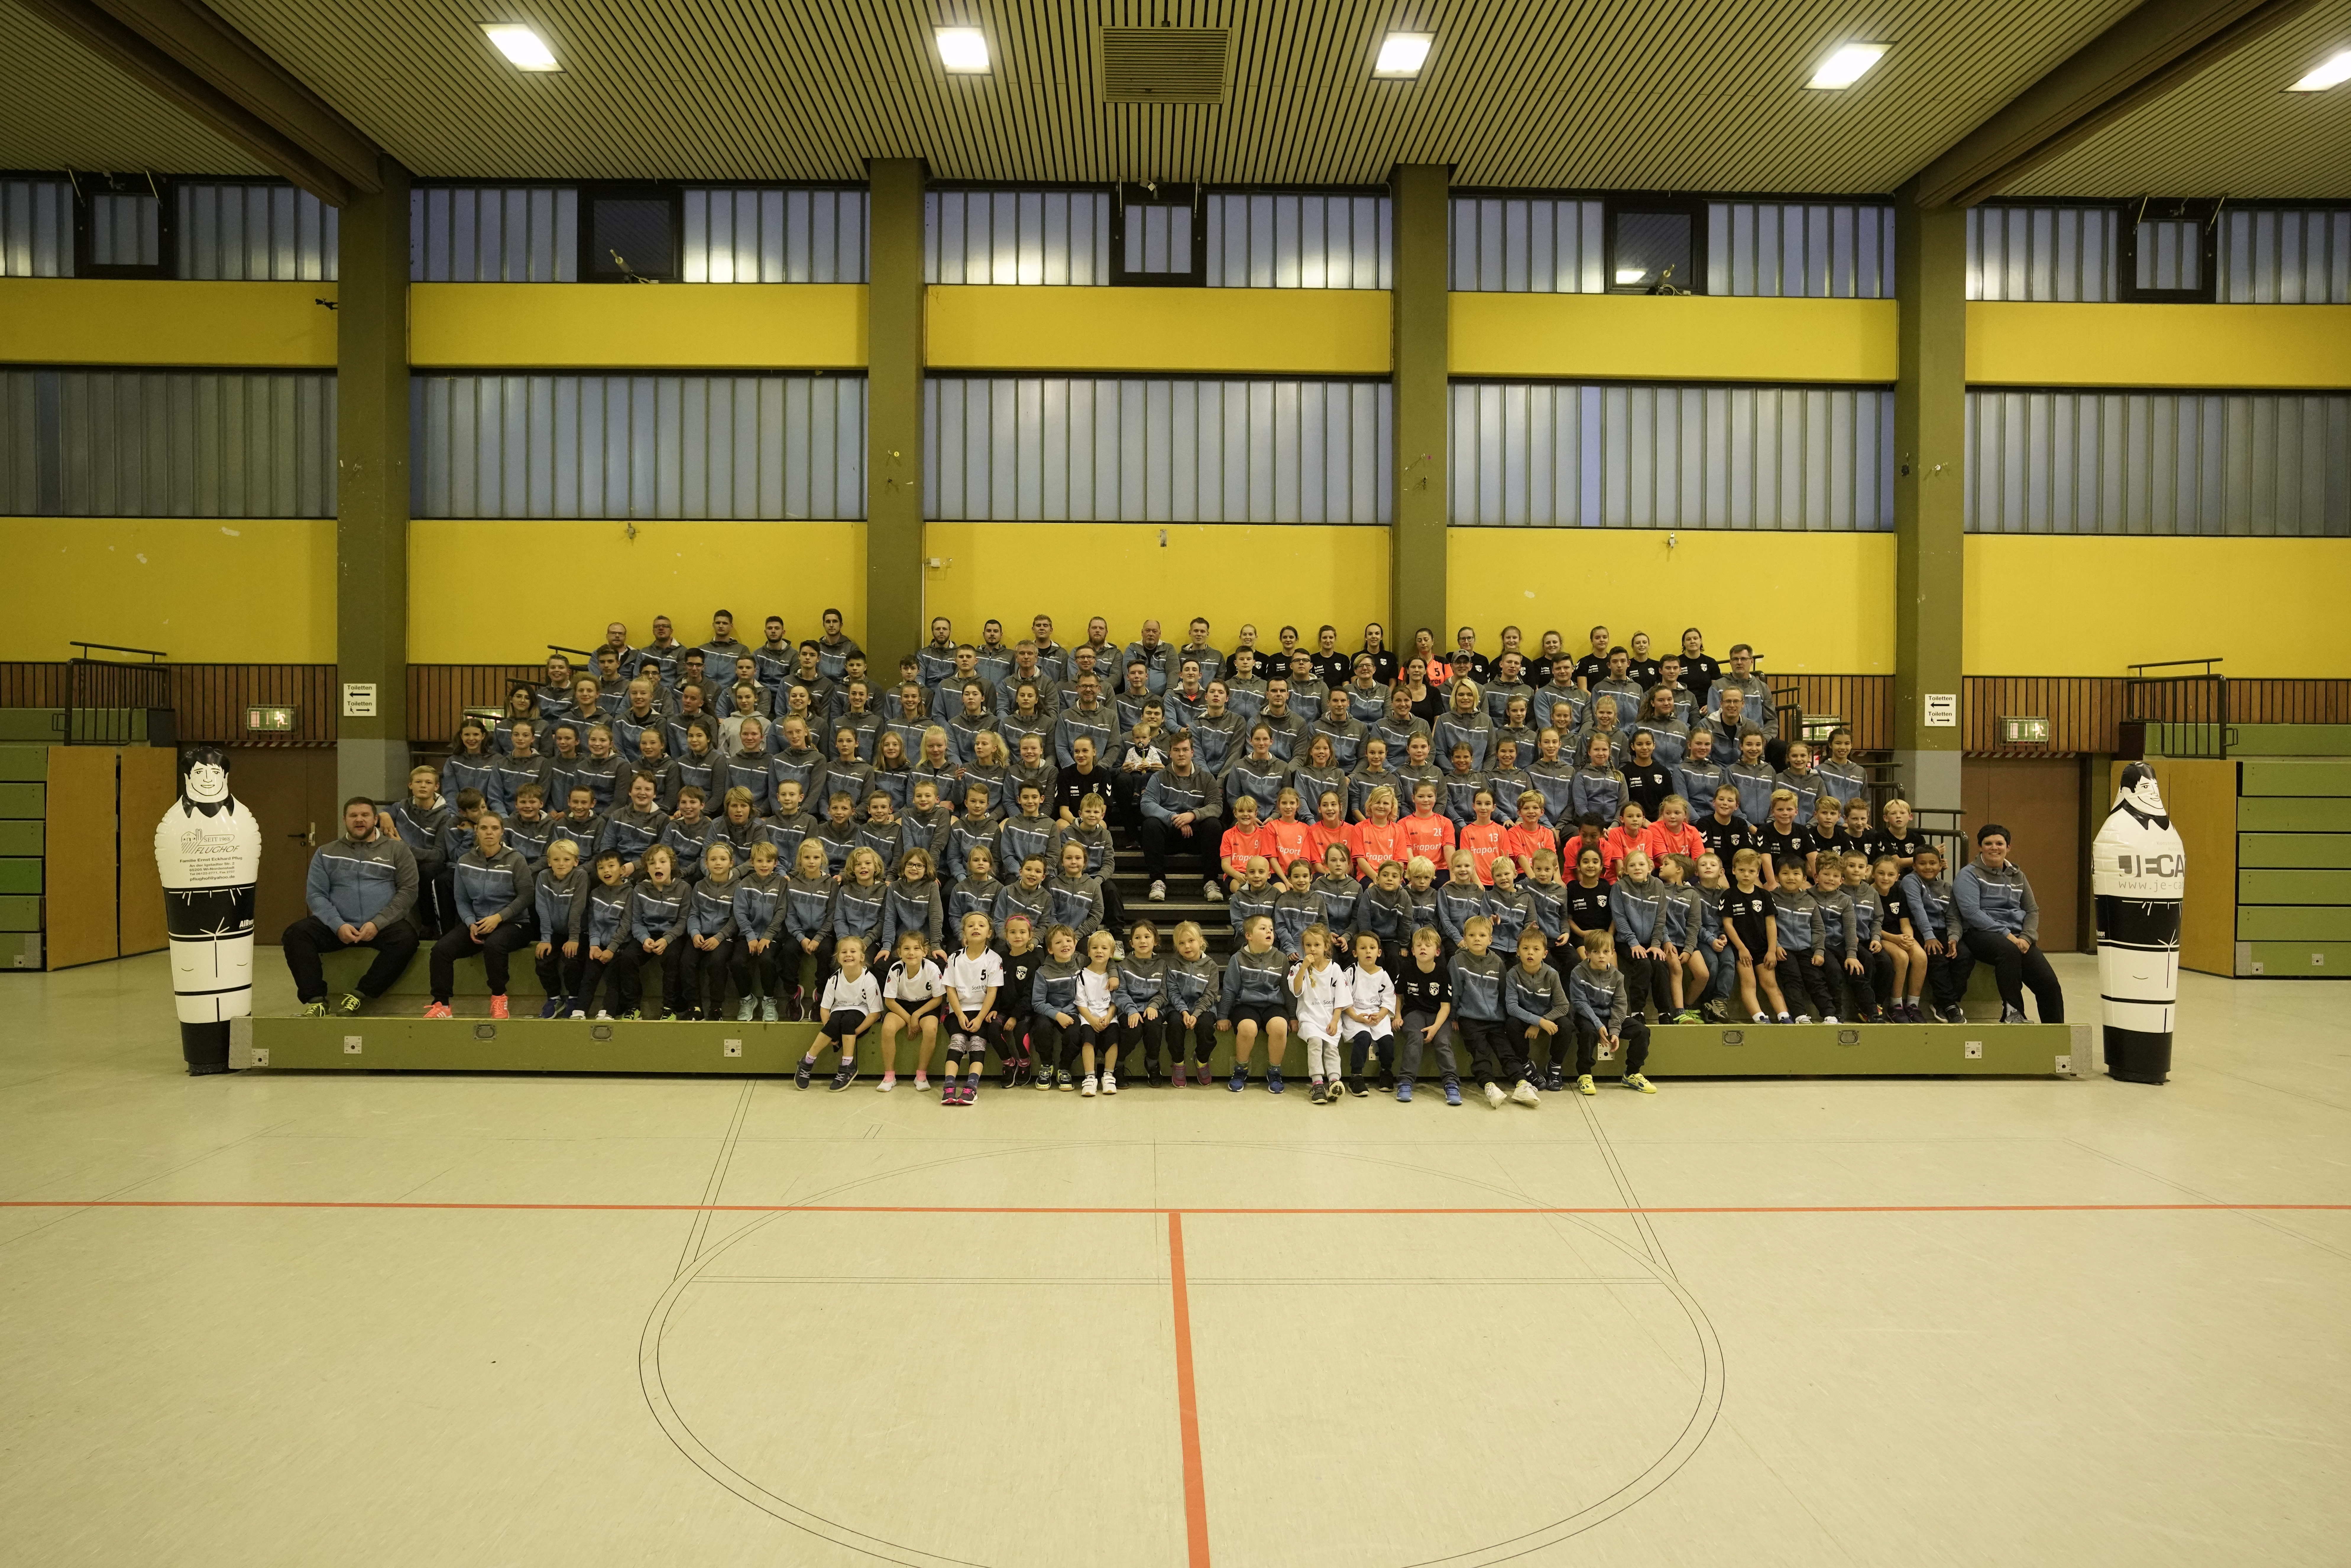 https://tus-nordenstadt-handball.de/wp-content/uploads/2021/09/Bild-von-Allen.jpg